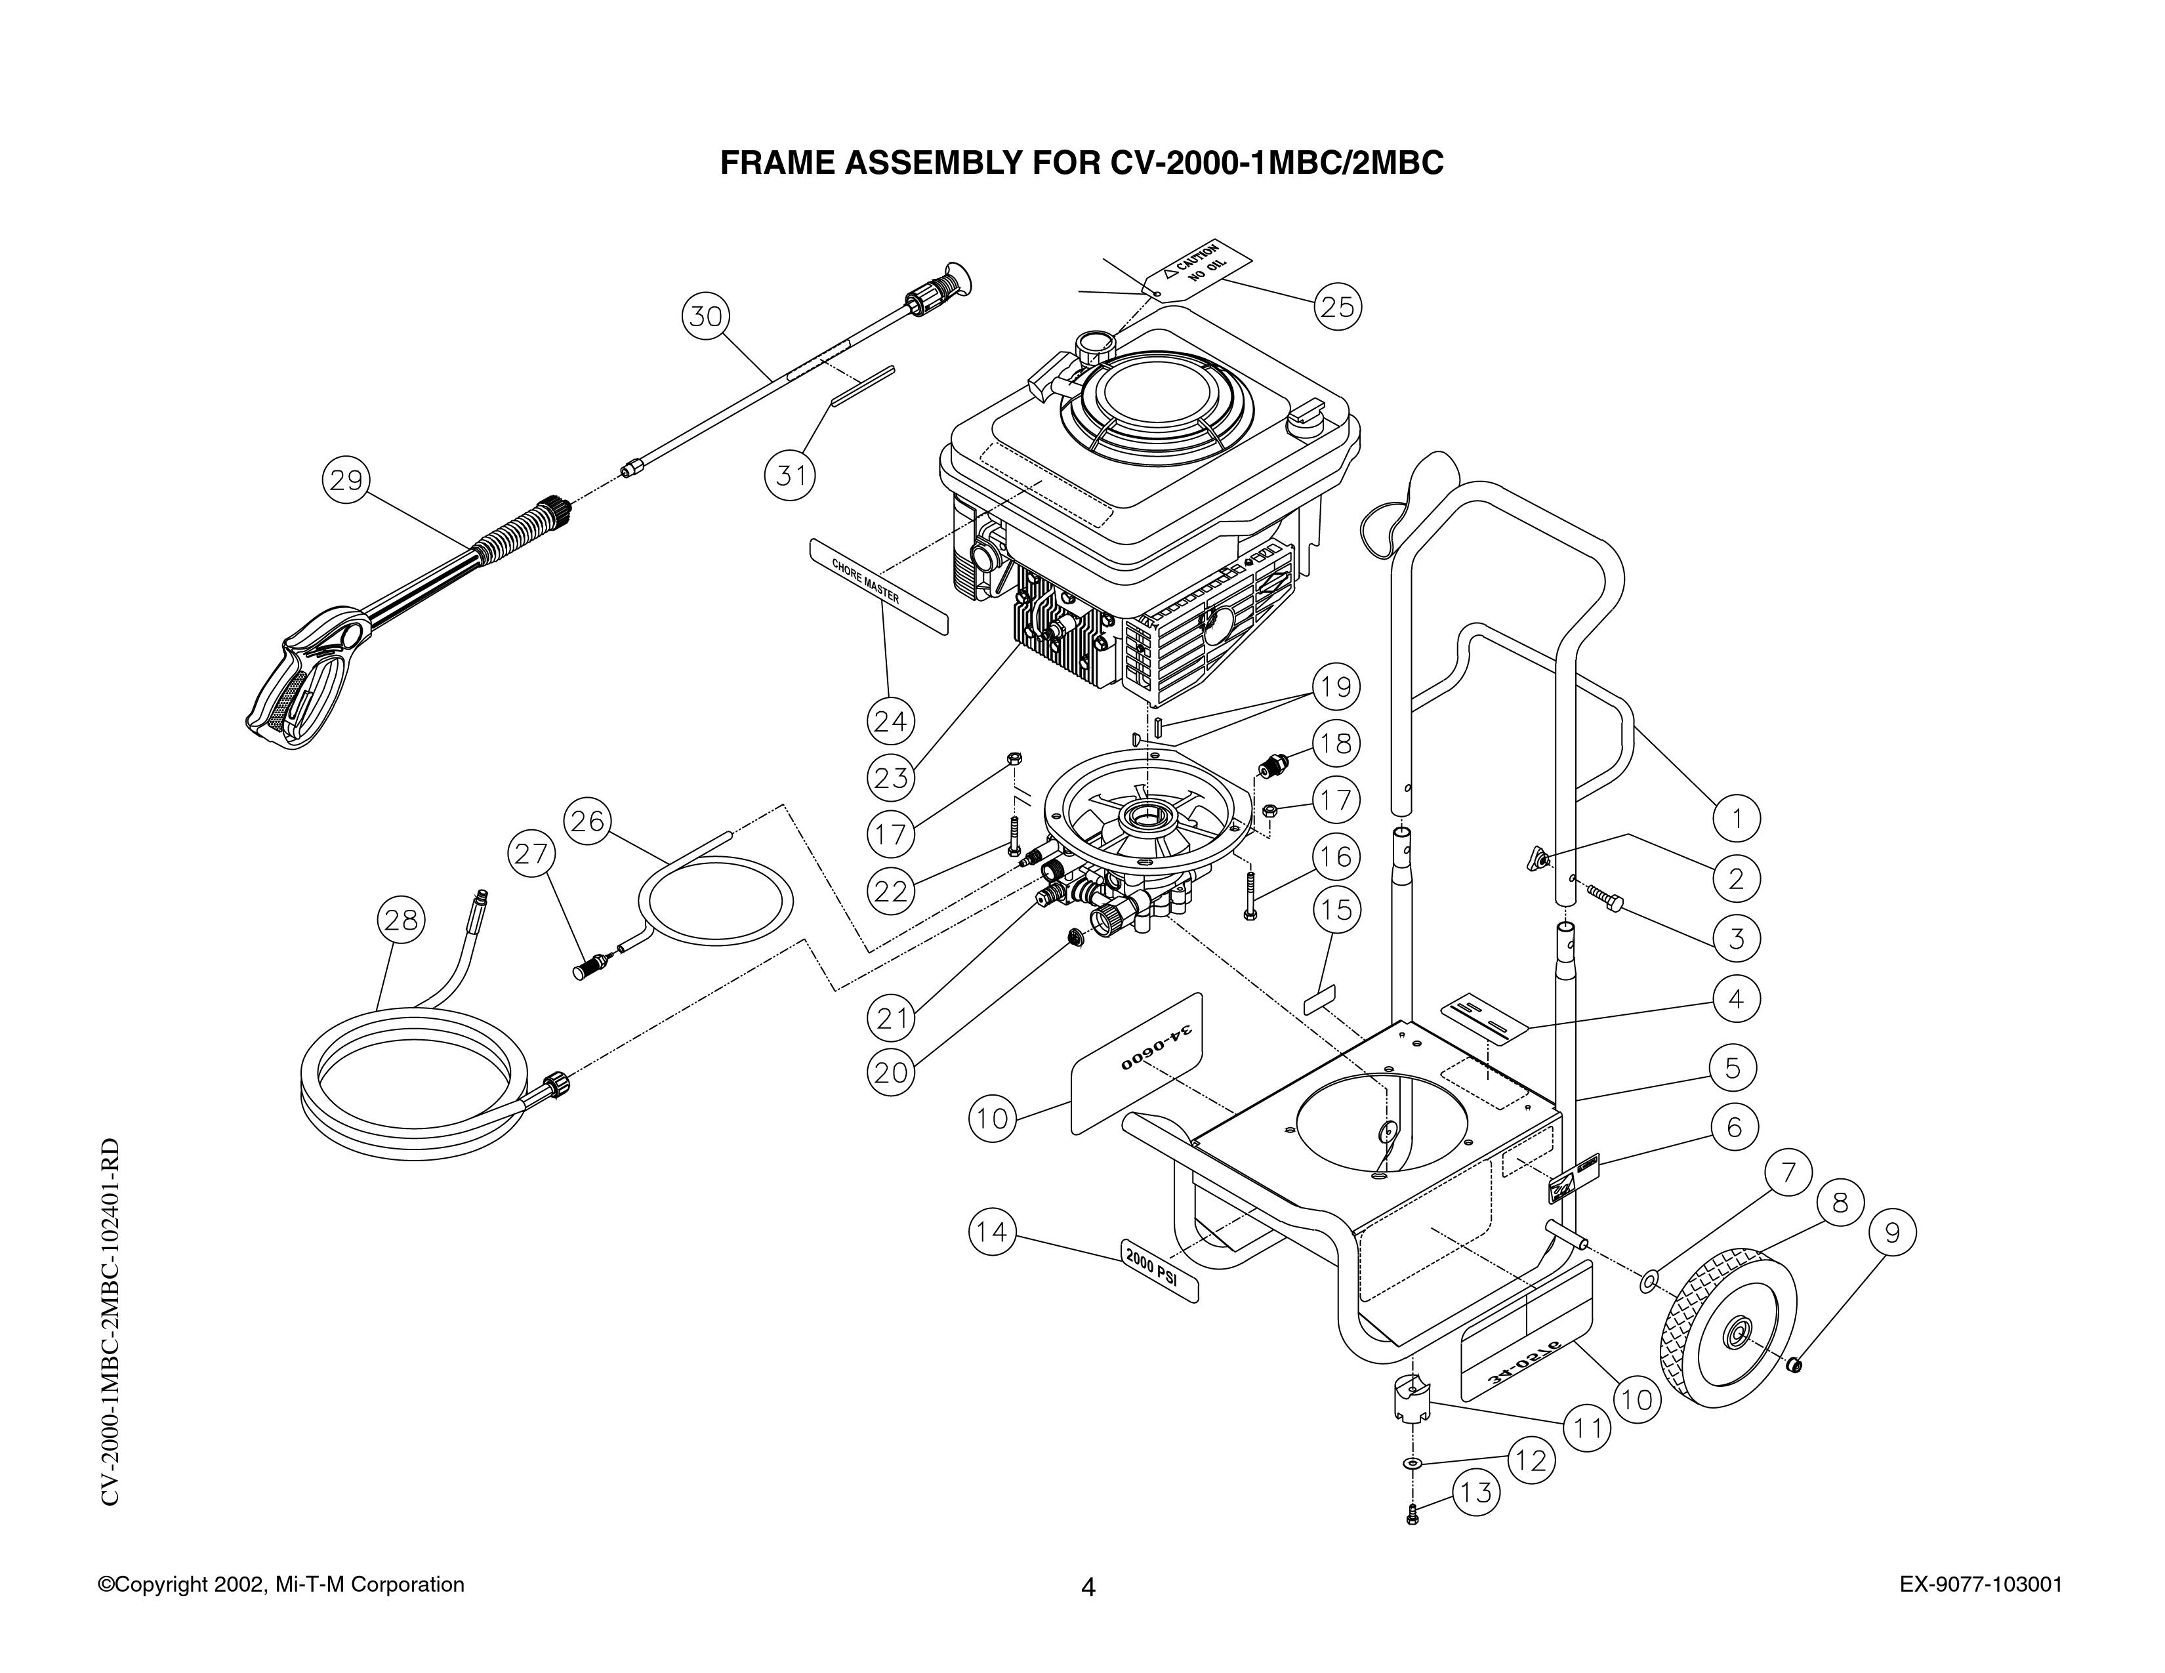 CV-2000-1MBC/2MBC pressure washer replacement parts, breakdown, pumps & repair kits.